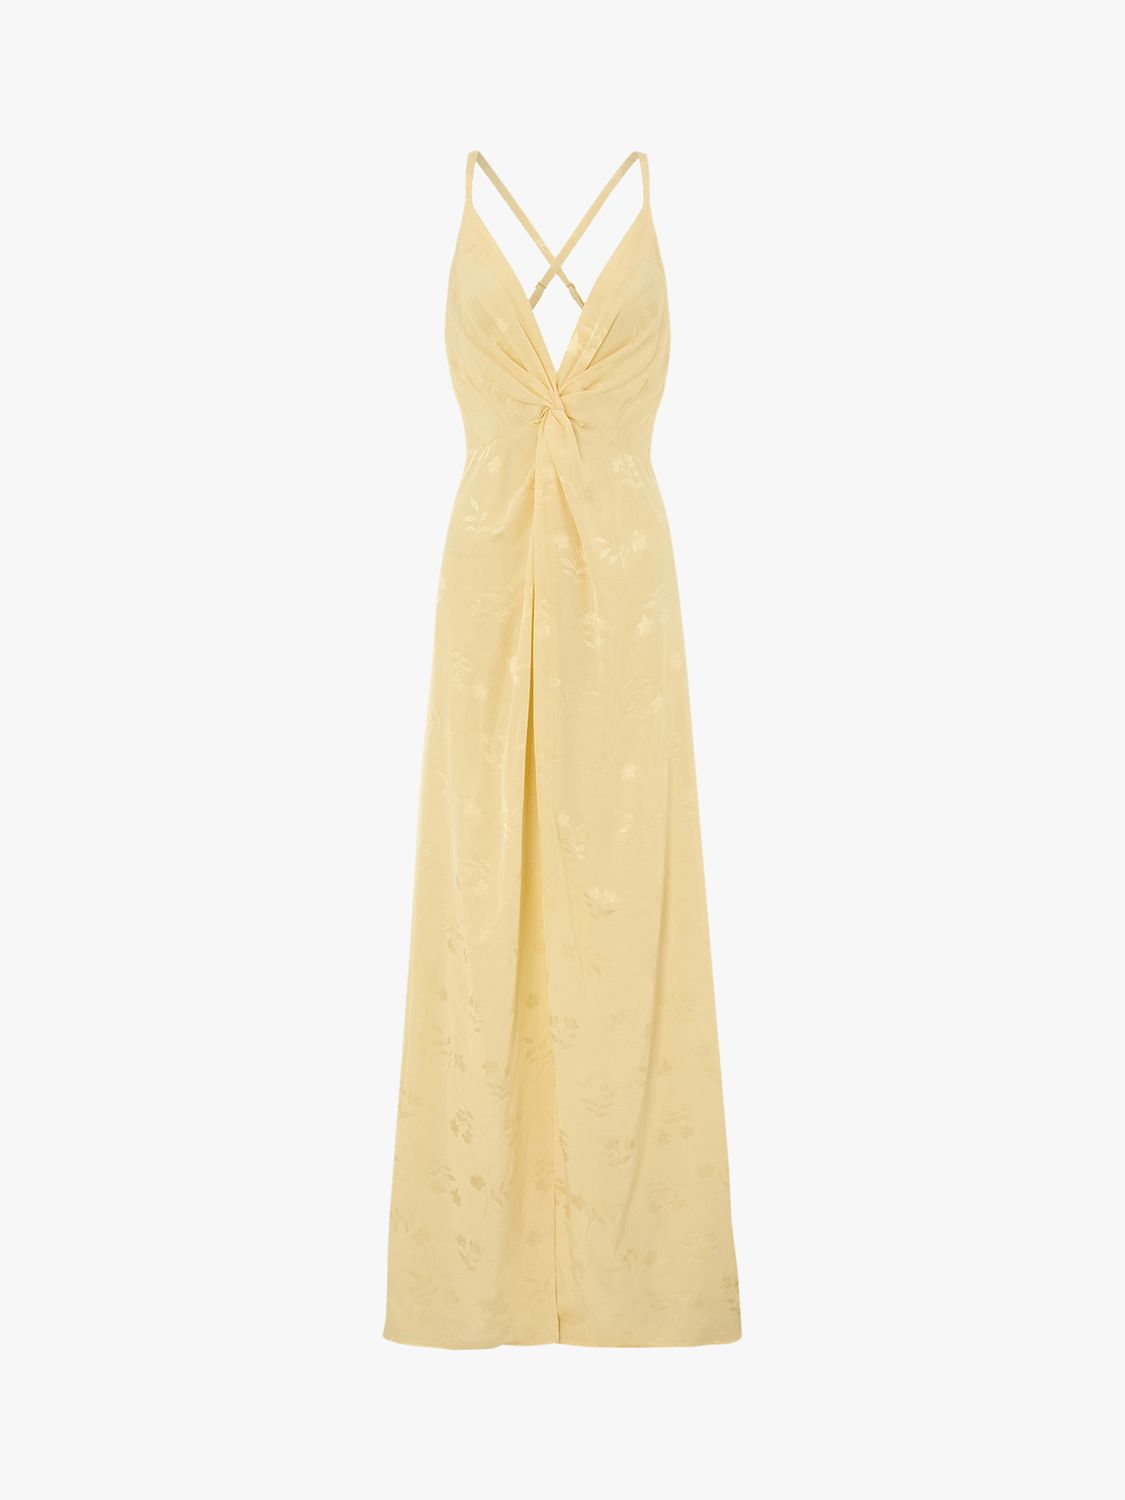 Monsoon Karlie Front Knot Jacquard Dress, Yellow at John Lewis & Partners